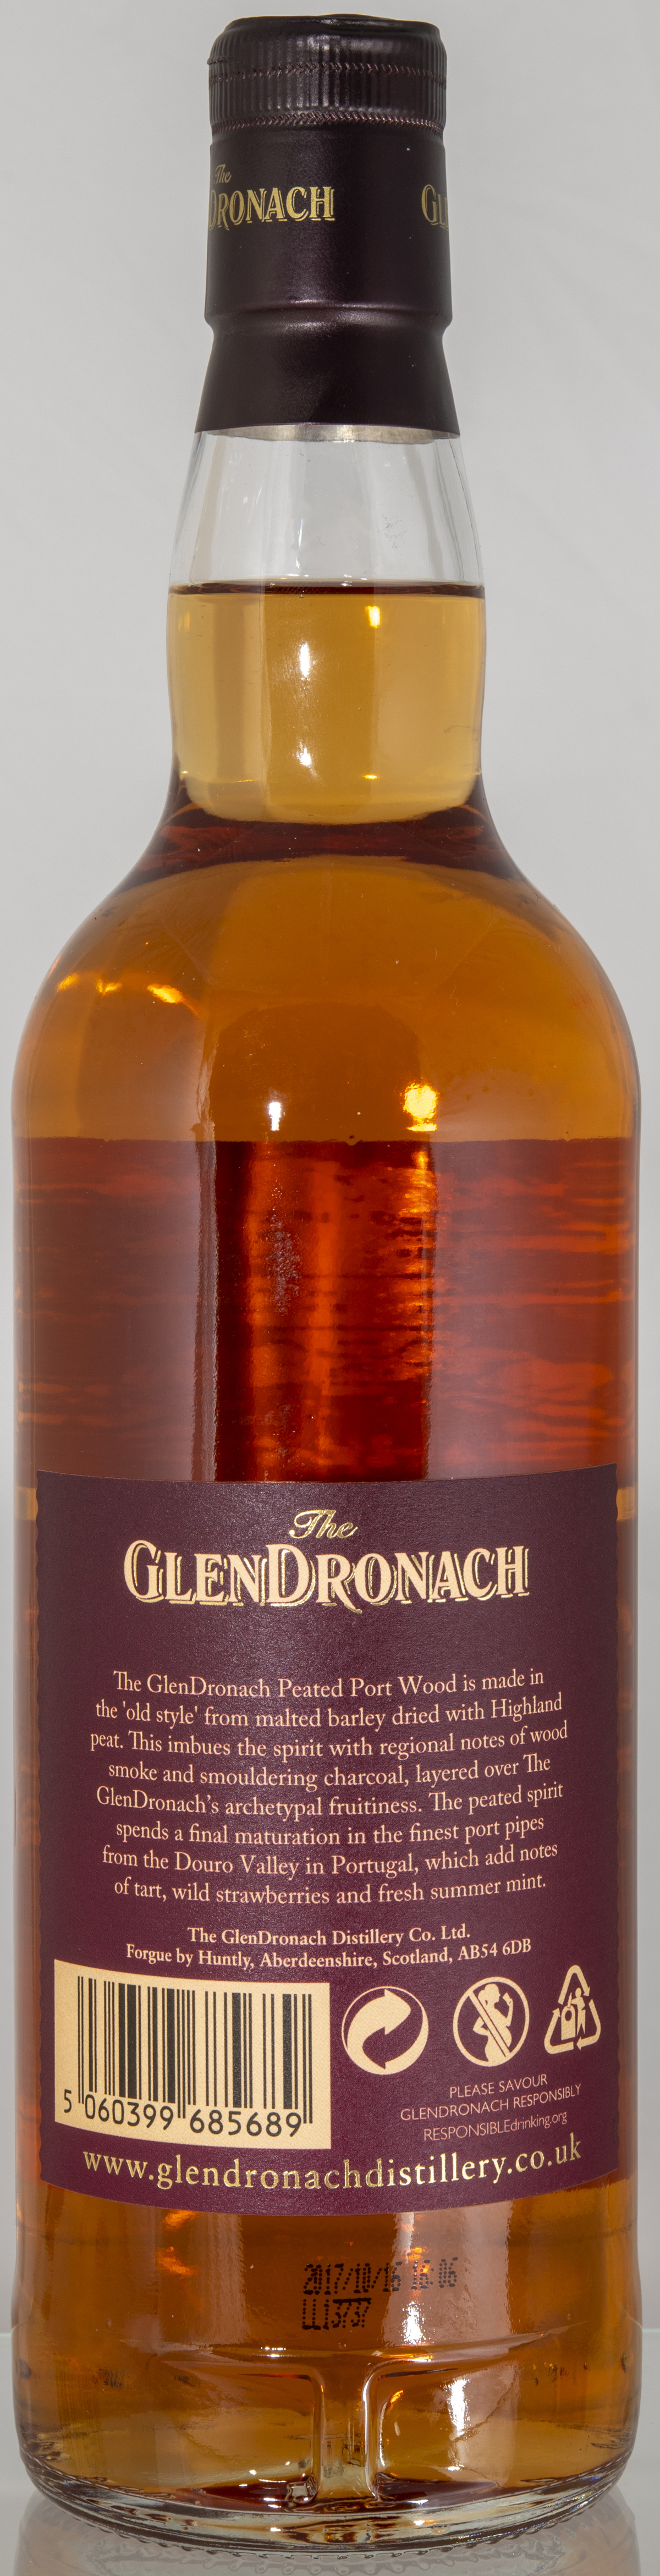 Billede: D85_8289 - Glendronach Peated Port Wood - bottle back.jpg